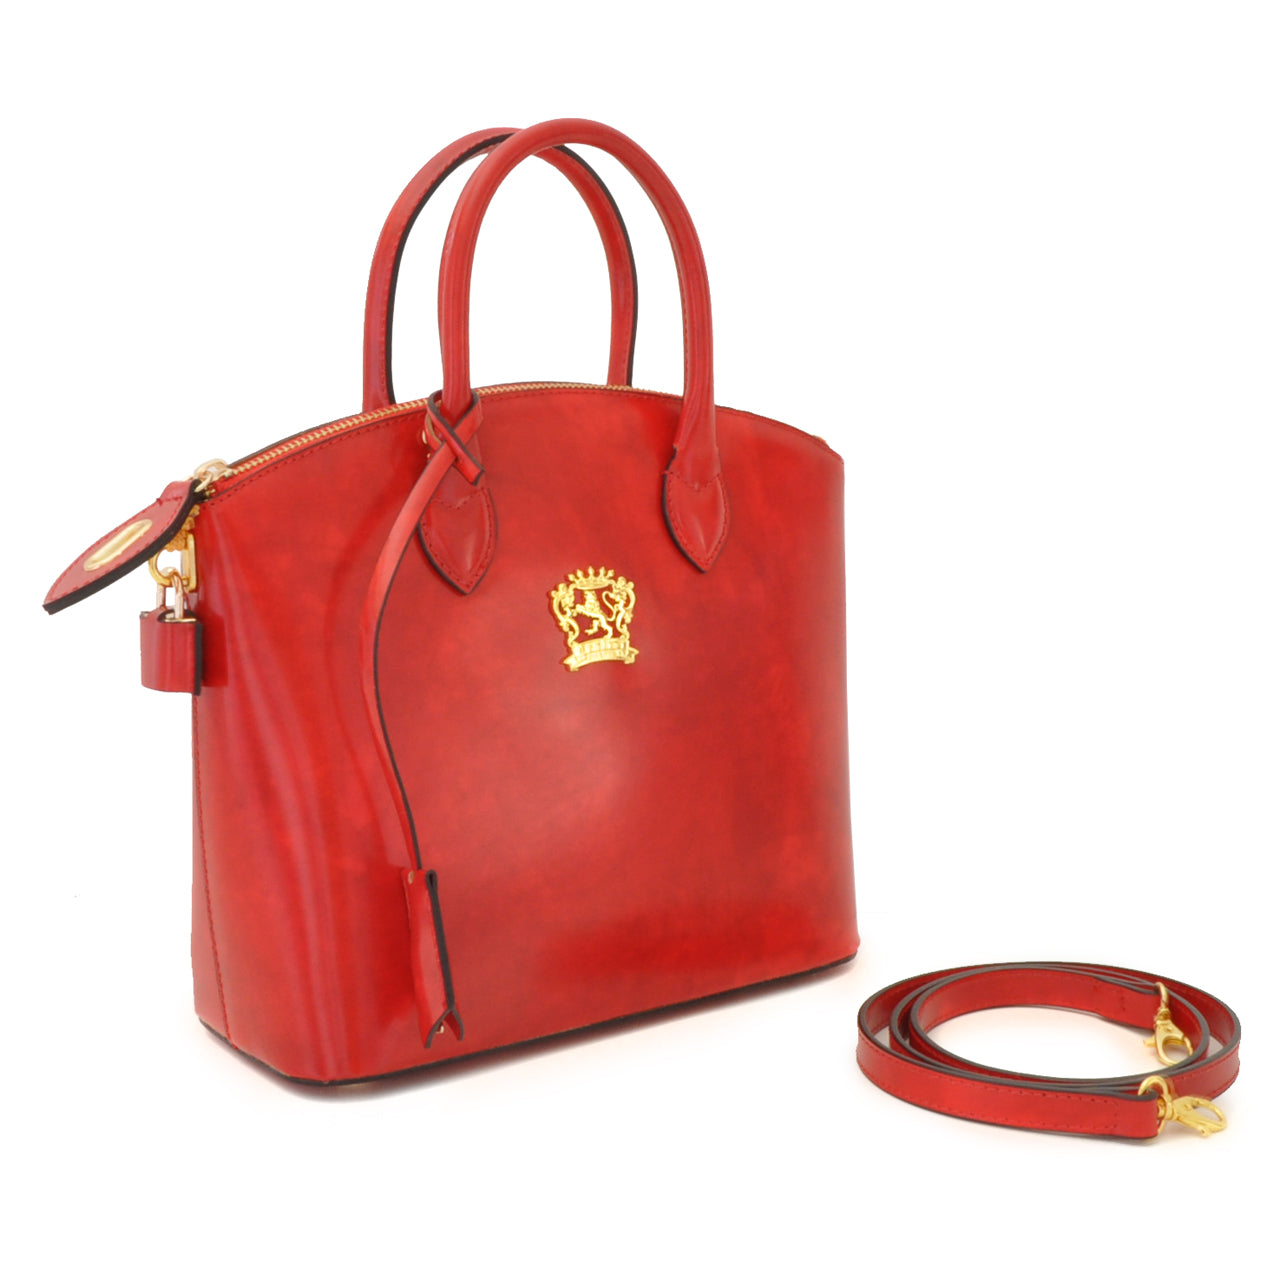 Pratesi Versilia Small Handbag in genuine Italian leather - Brunelleschi Leather Chianti